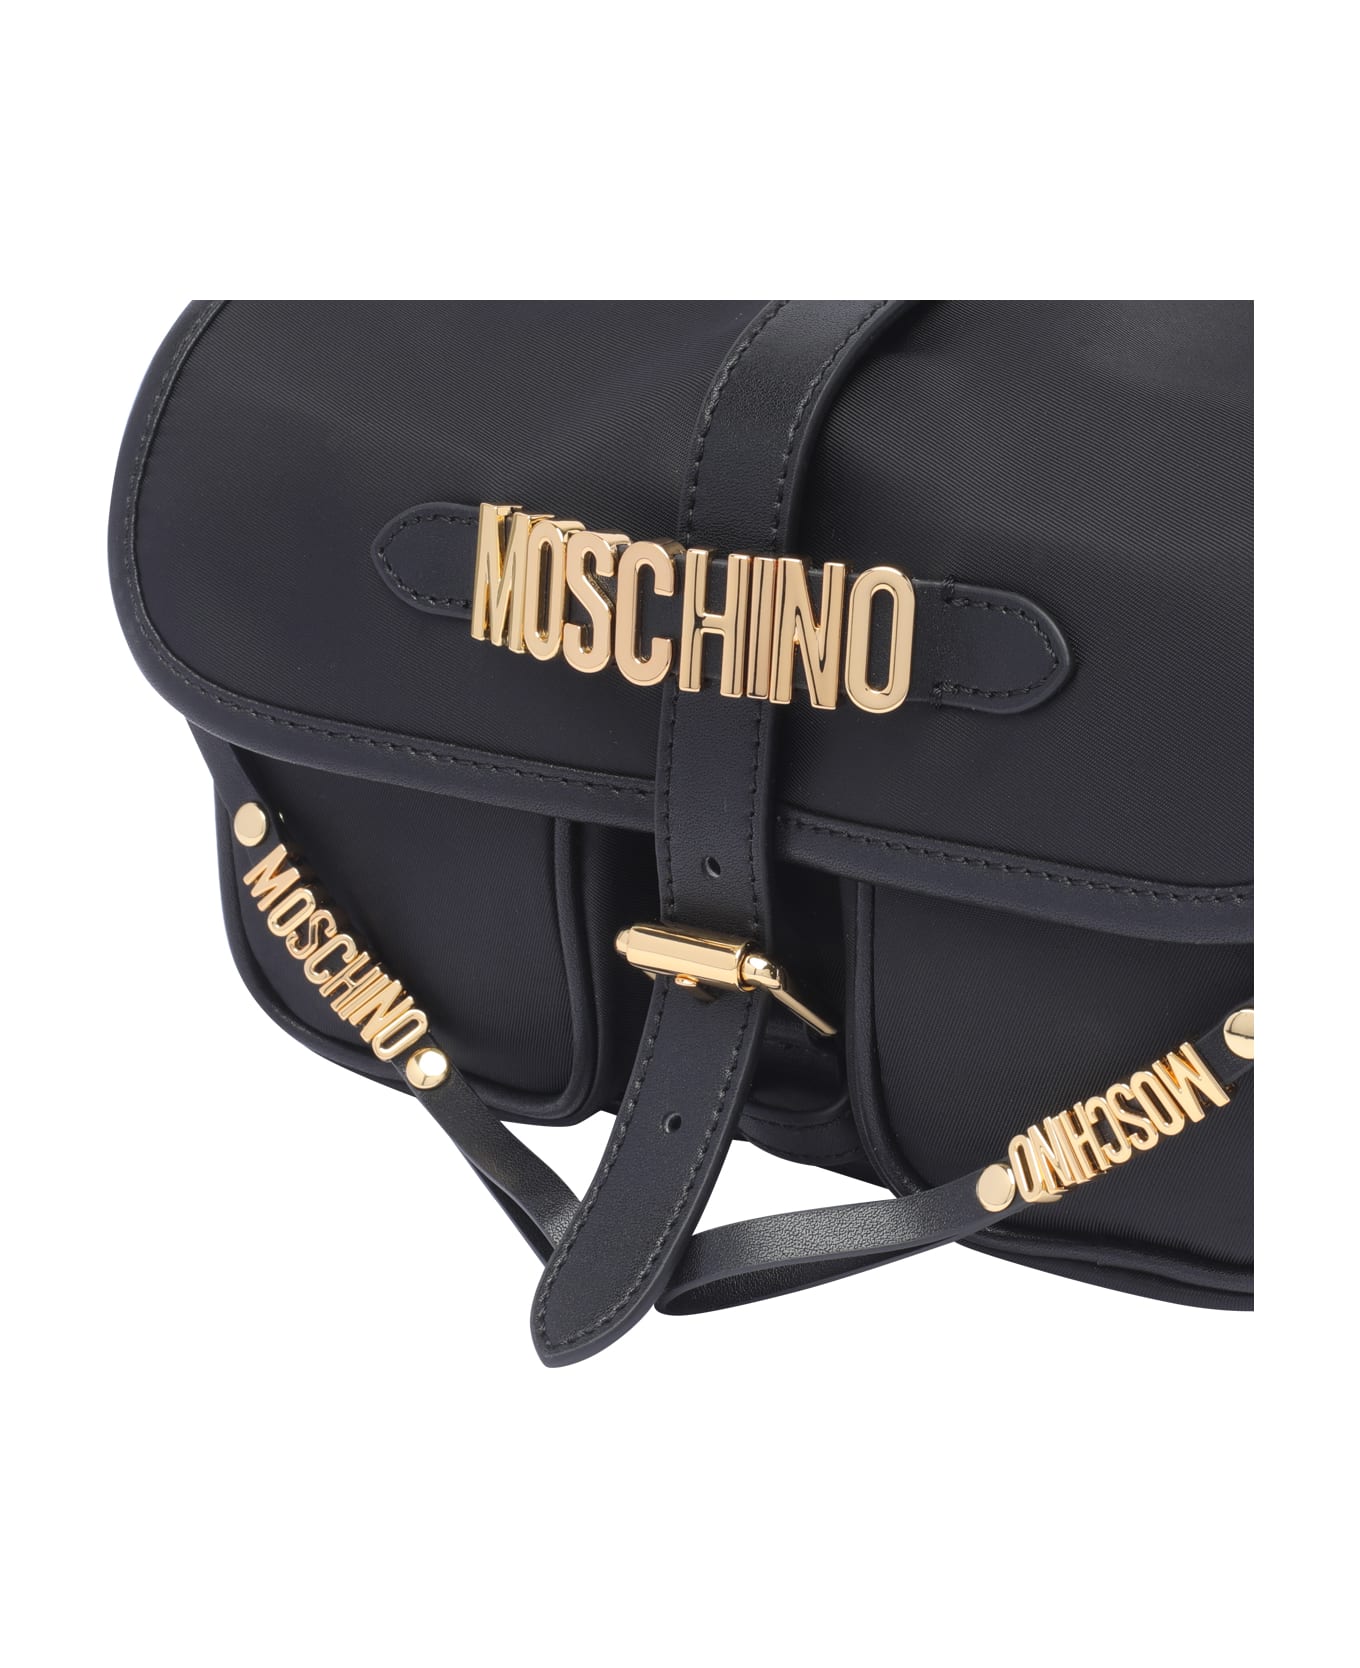 Moschino Black Nylon Bag - Black